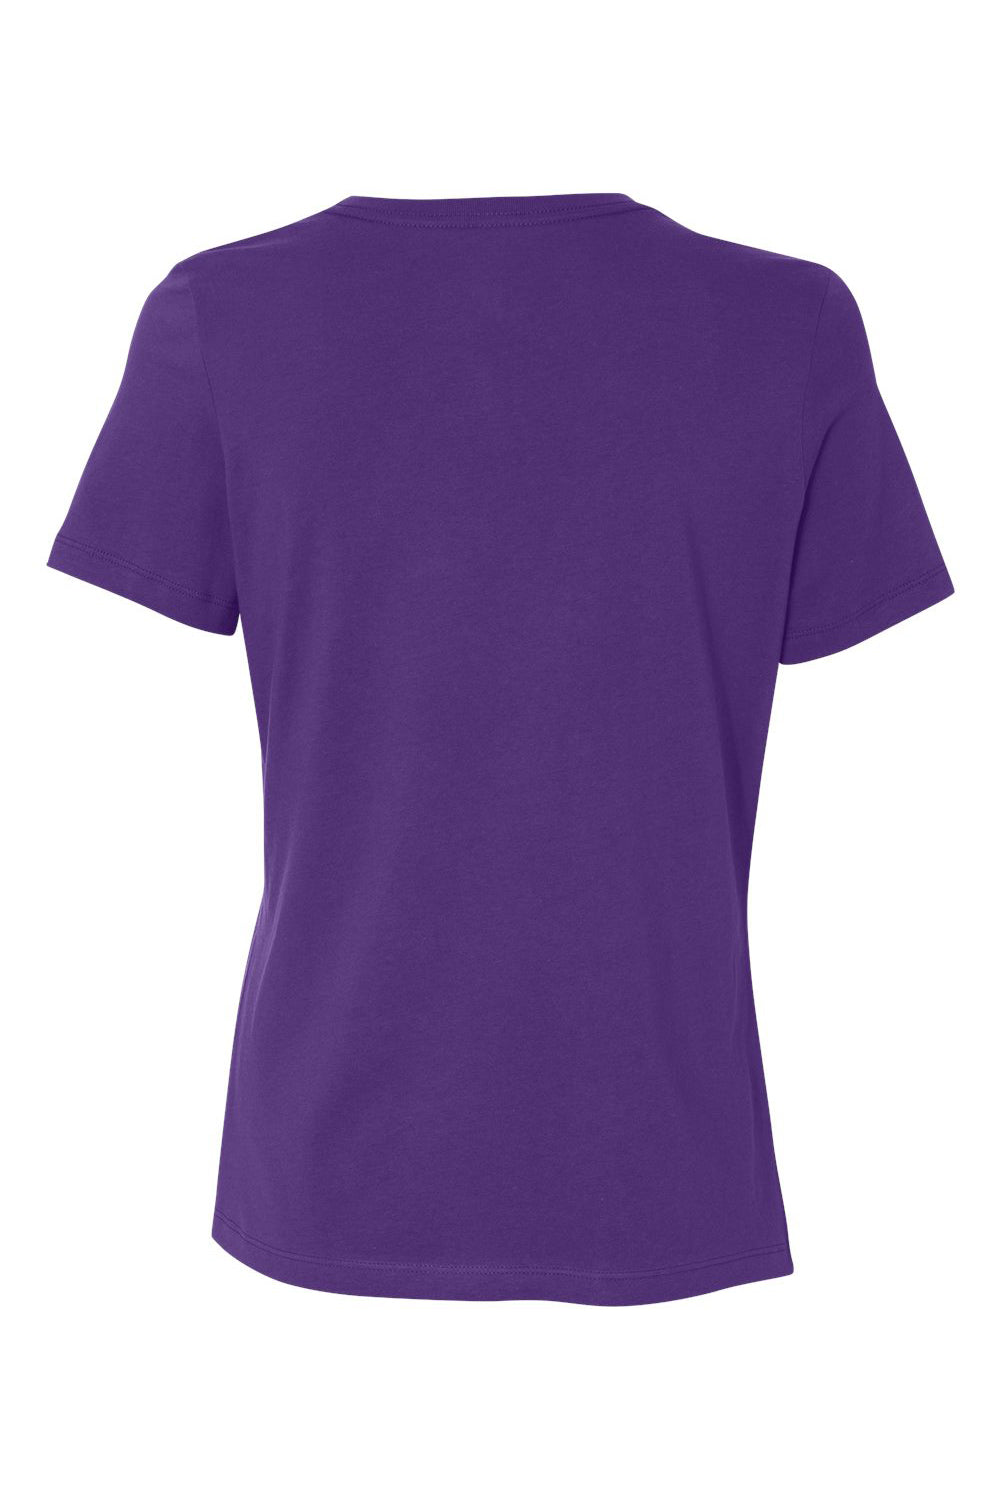 Bella + Canvas BC6400/B6400/6400 Womens Relaxed Jersey Short Sleeve Crewneck T-Shirt Team Purple Flat Back